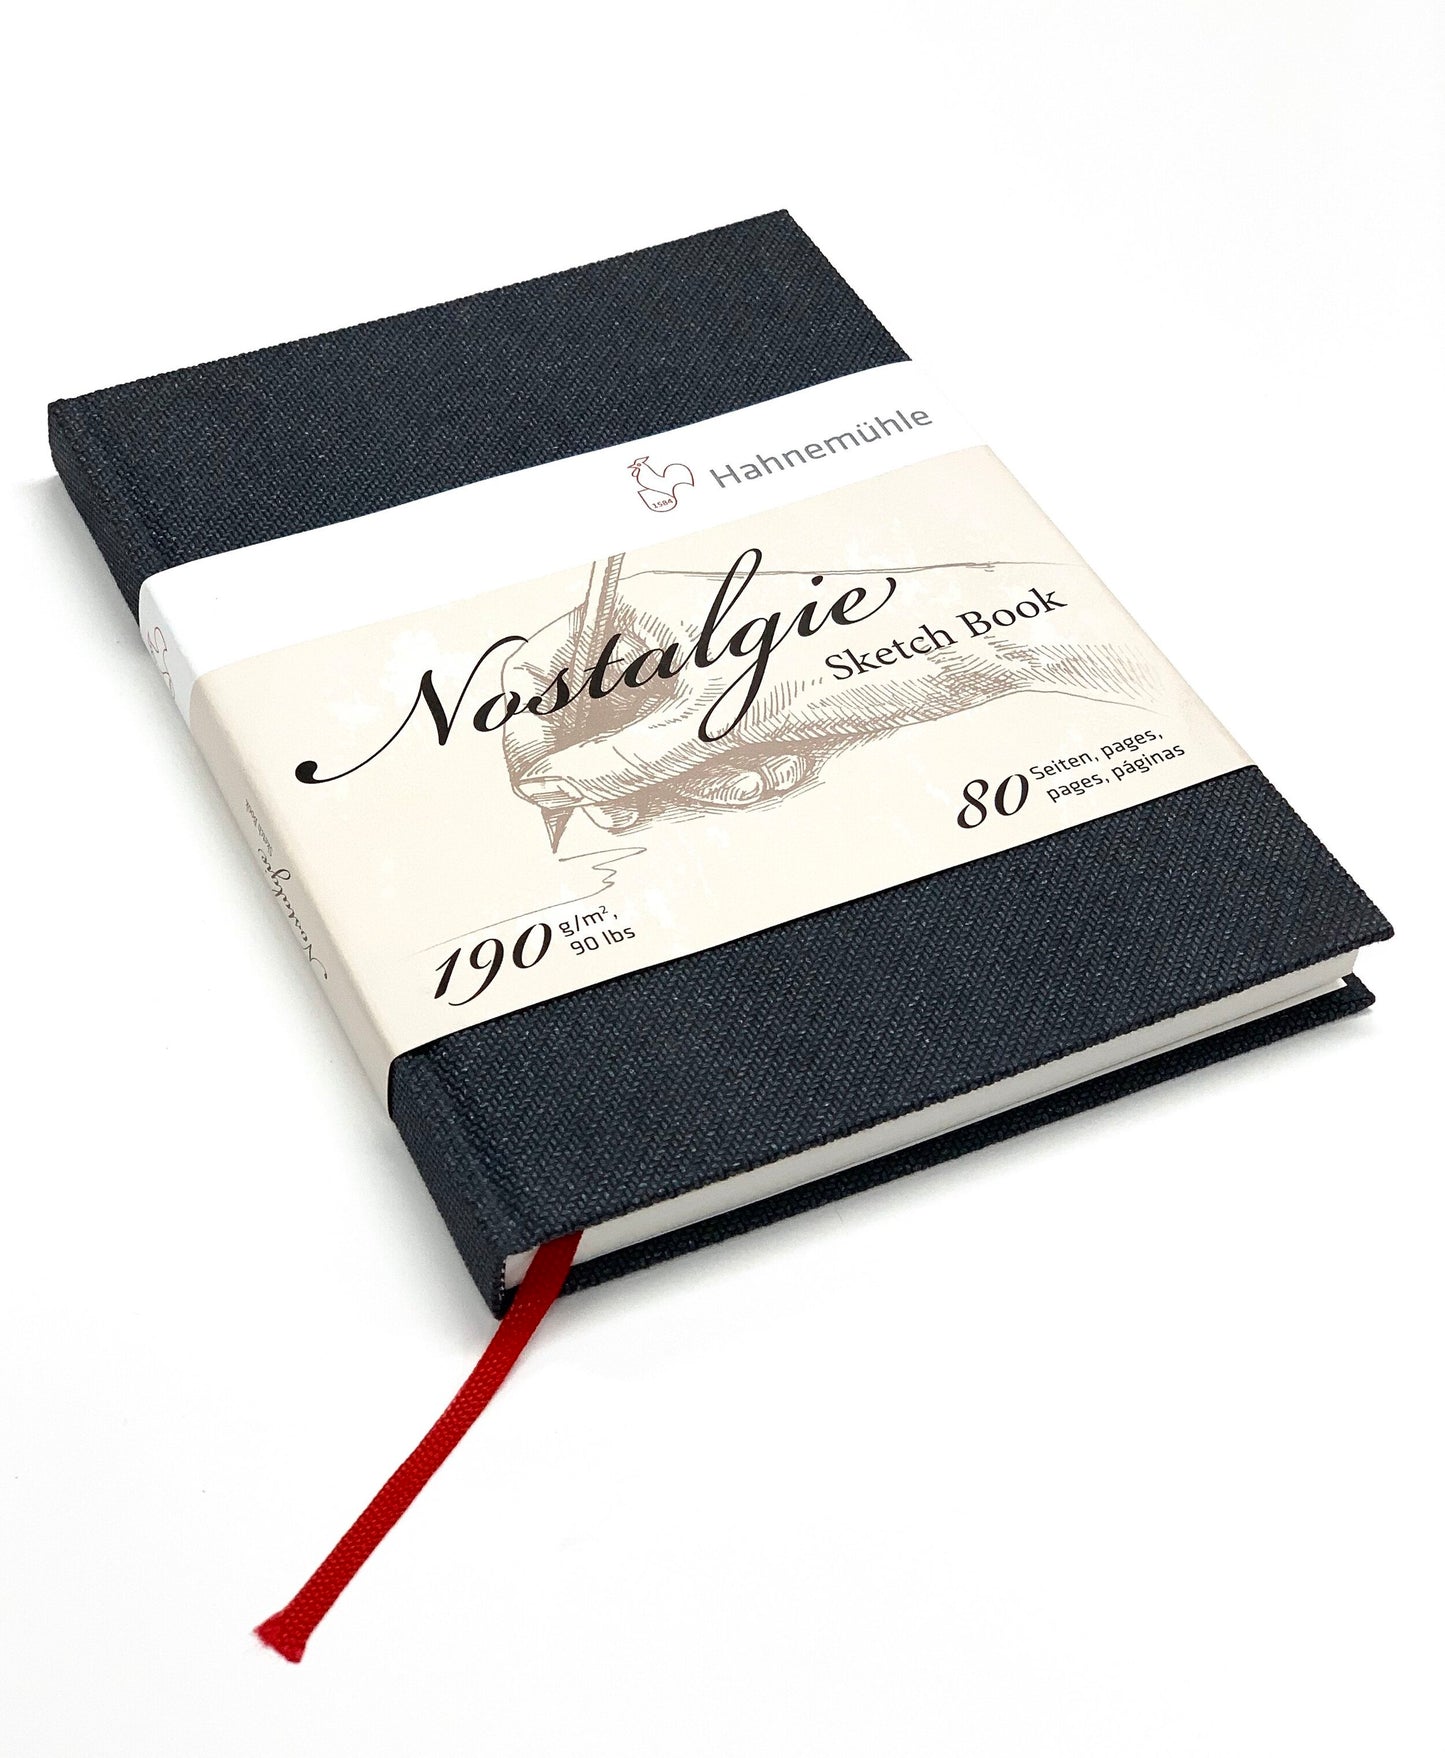 Nostalgie Sketchbooks by Hahnemuhle